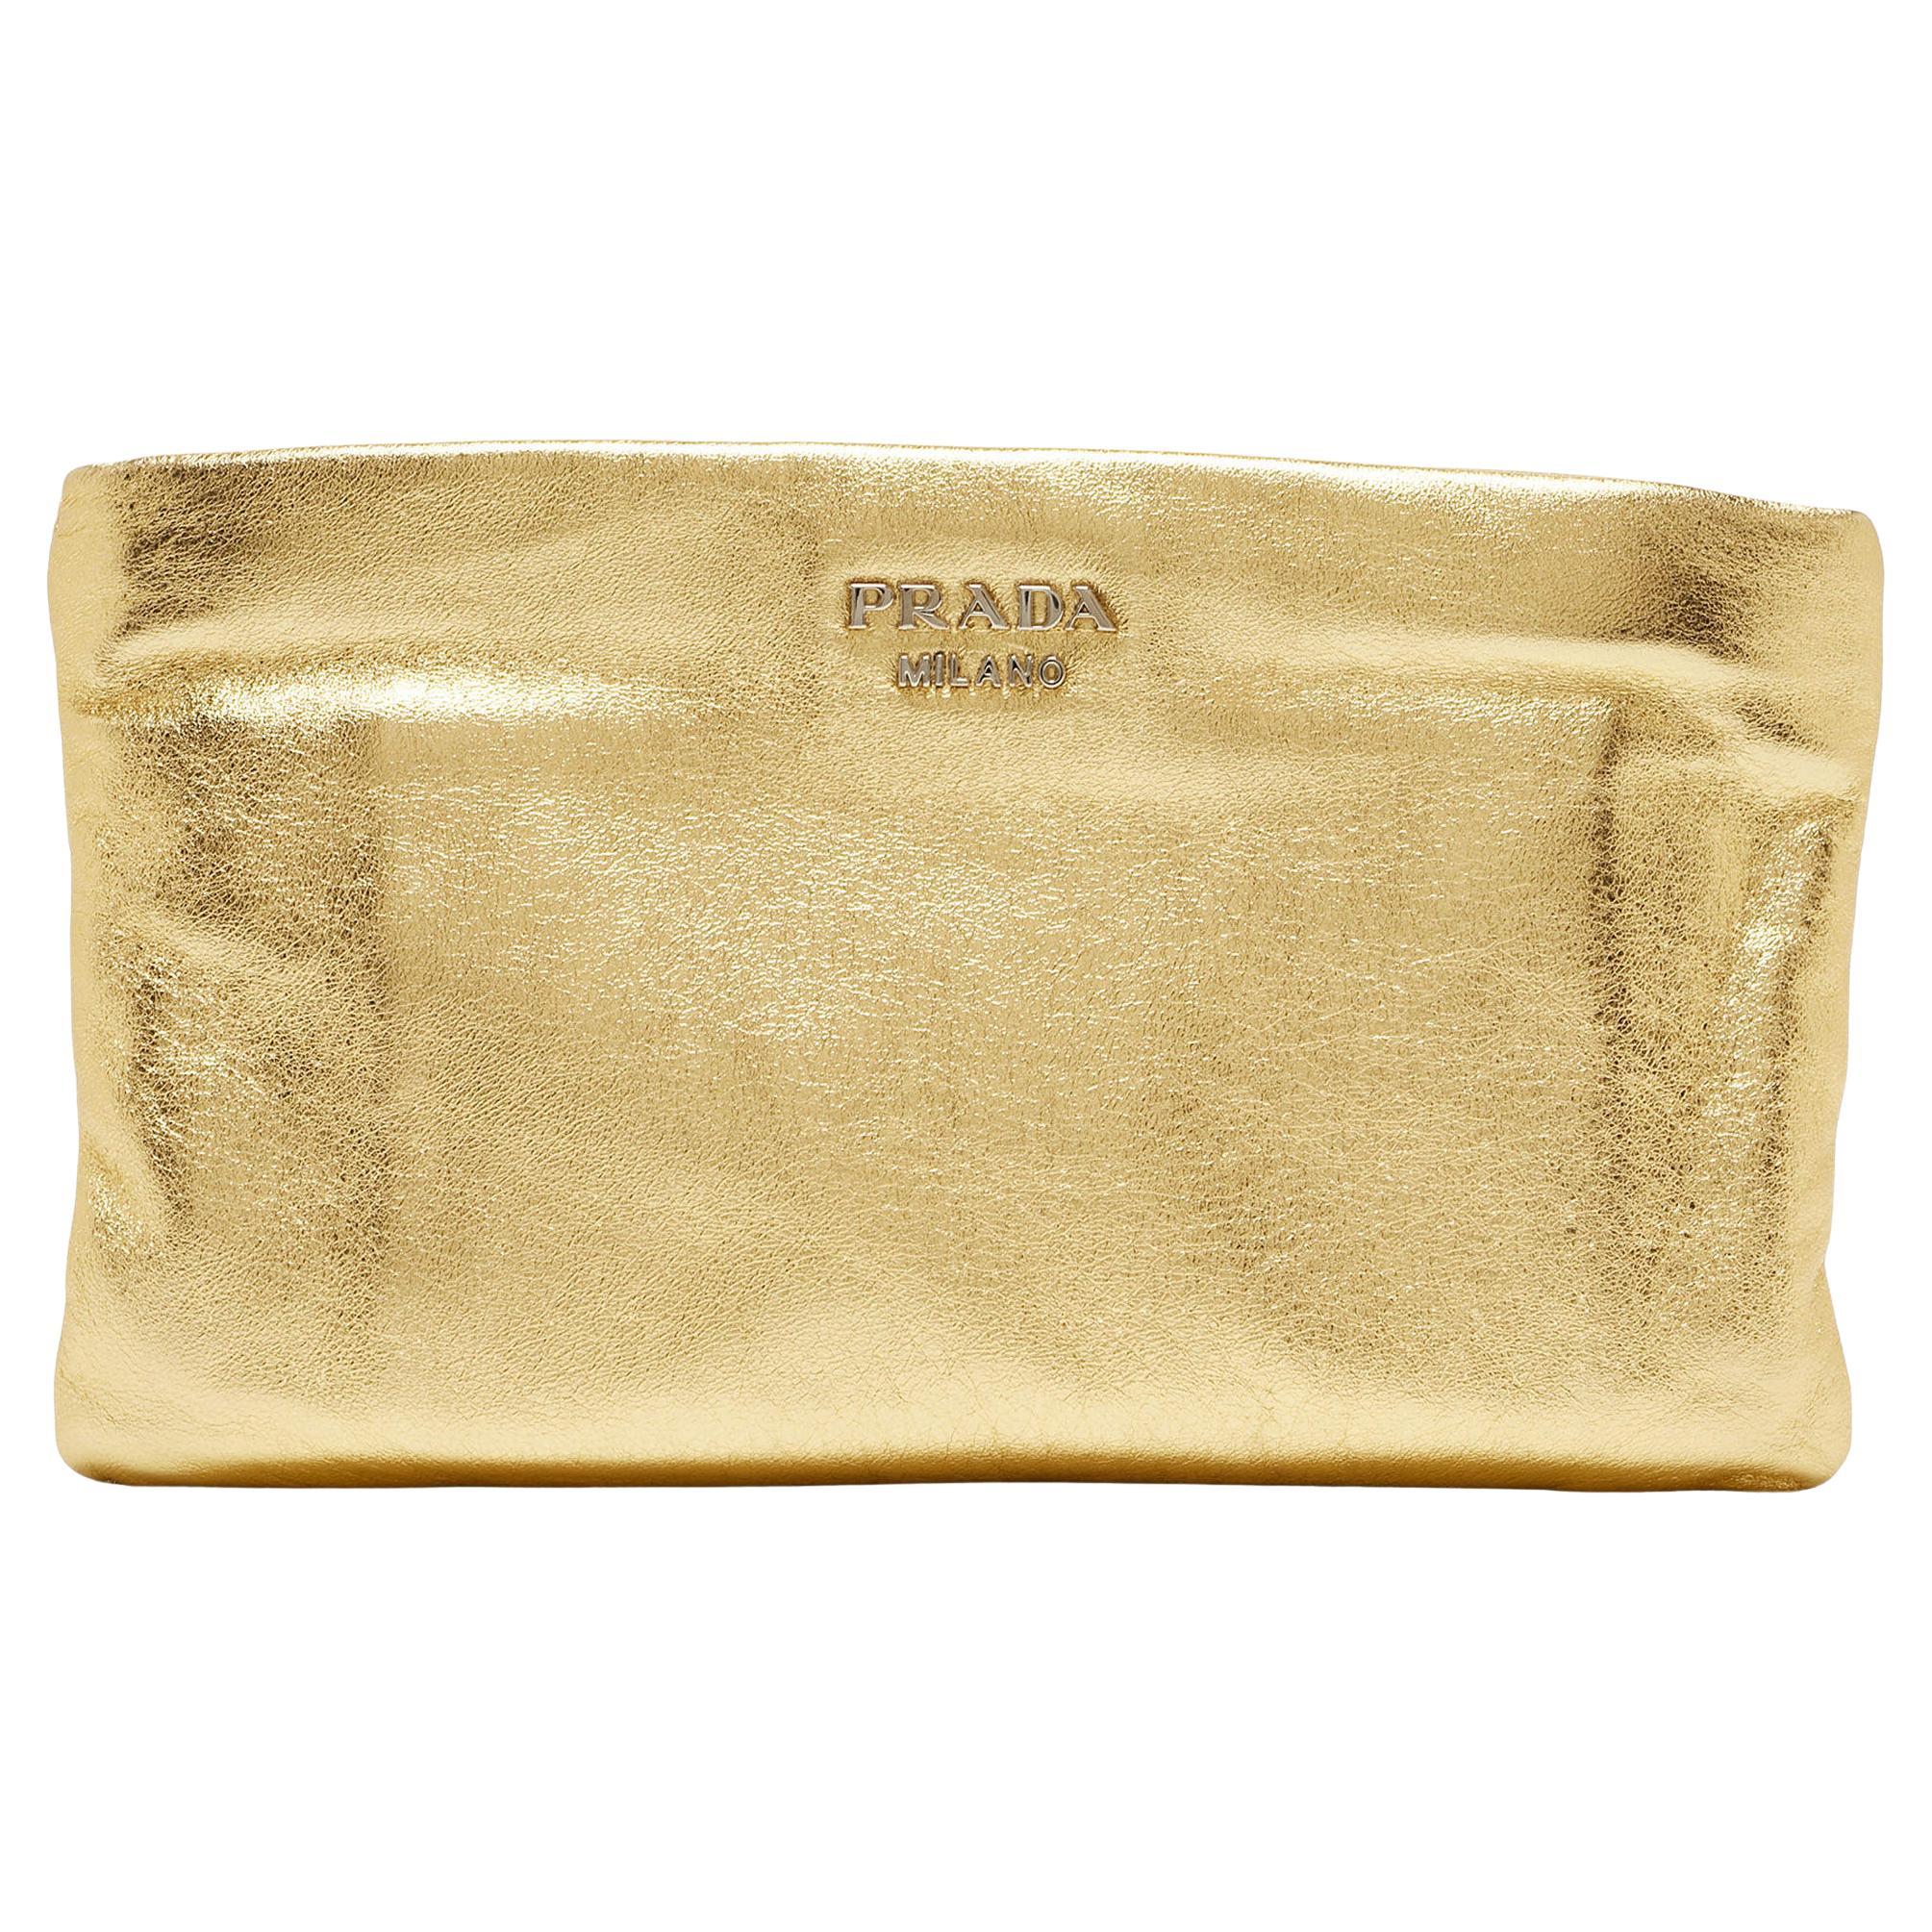 Prada Metallic Gold Leather Double Zip Clutch For Sale